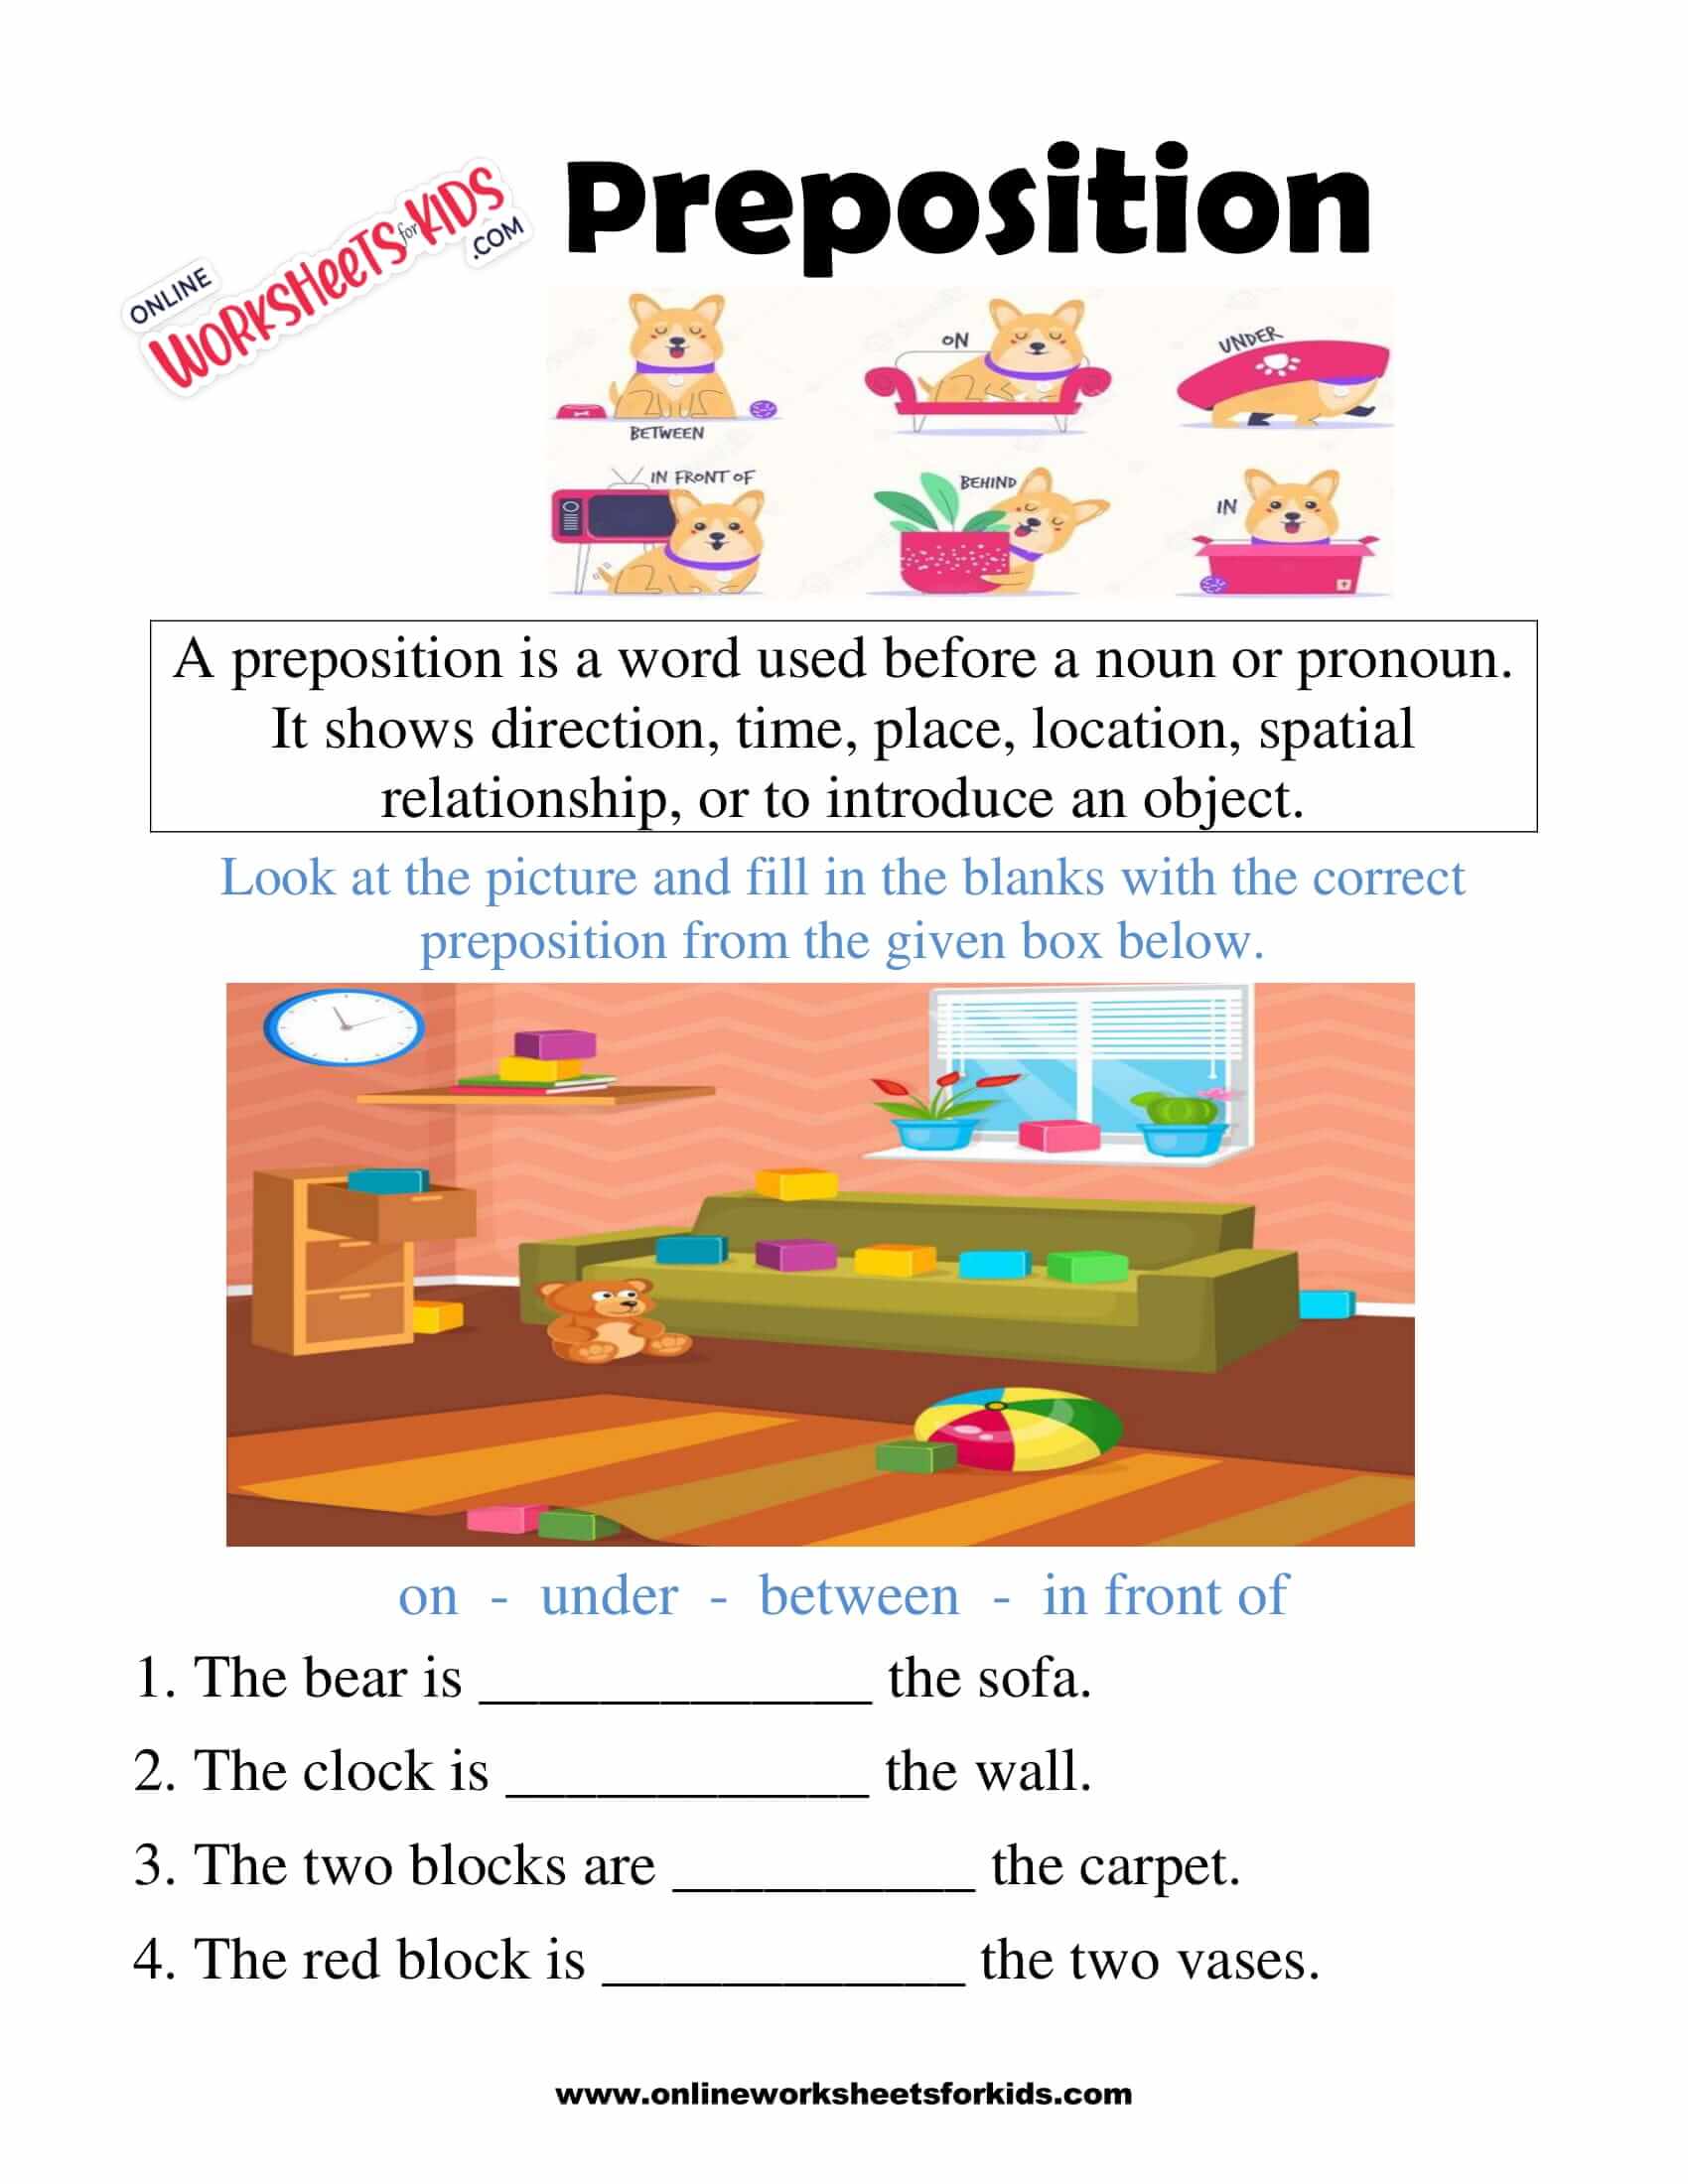 preposition-worksheets-for-grade-1-5